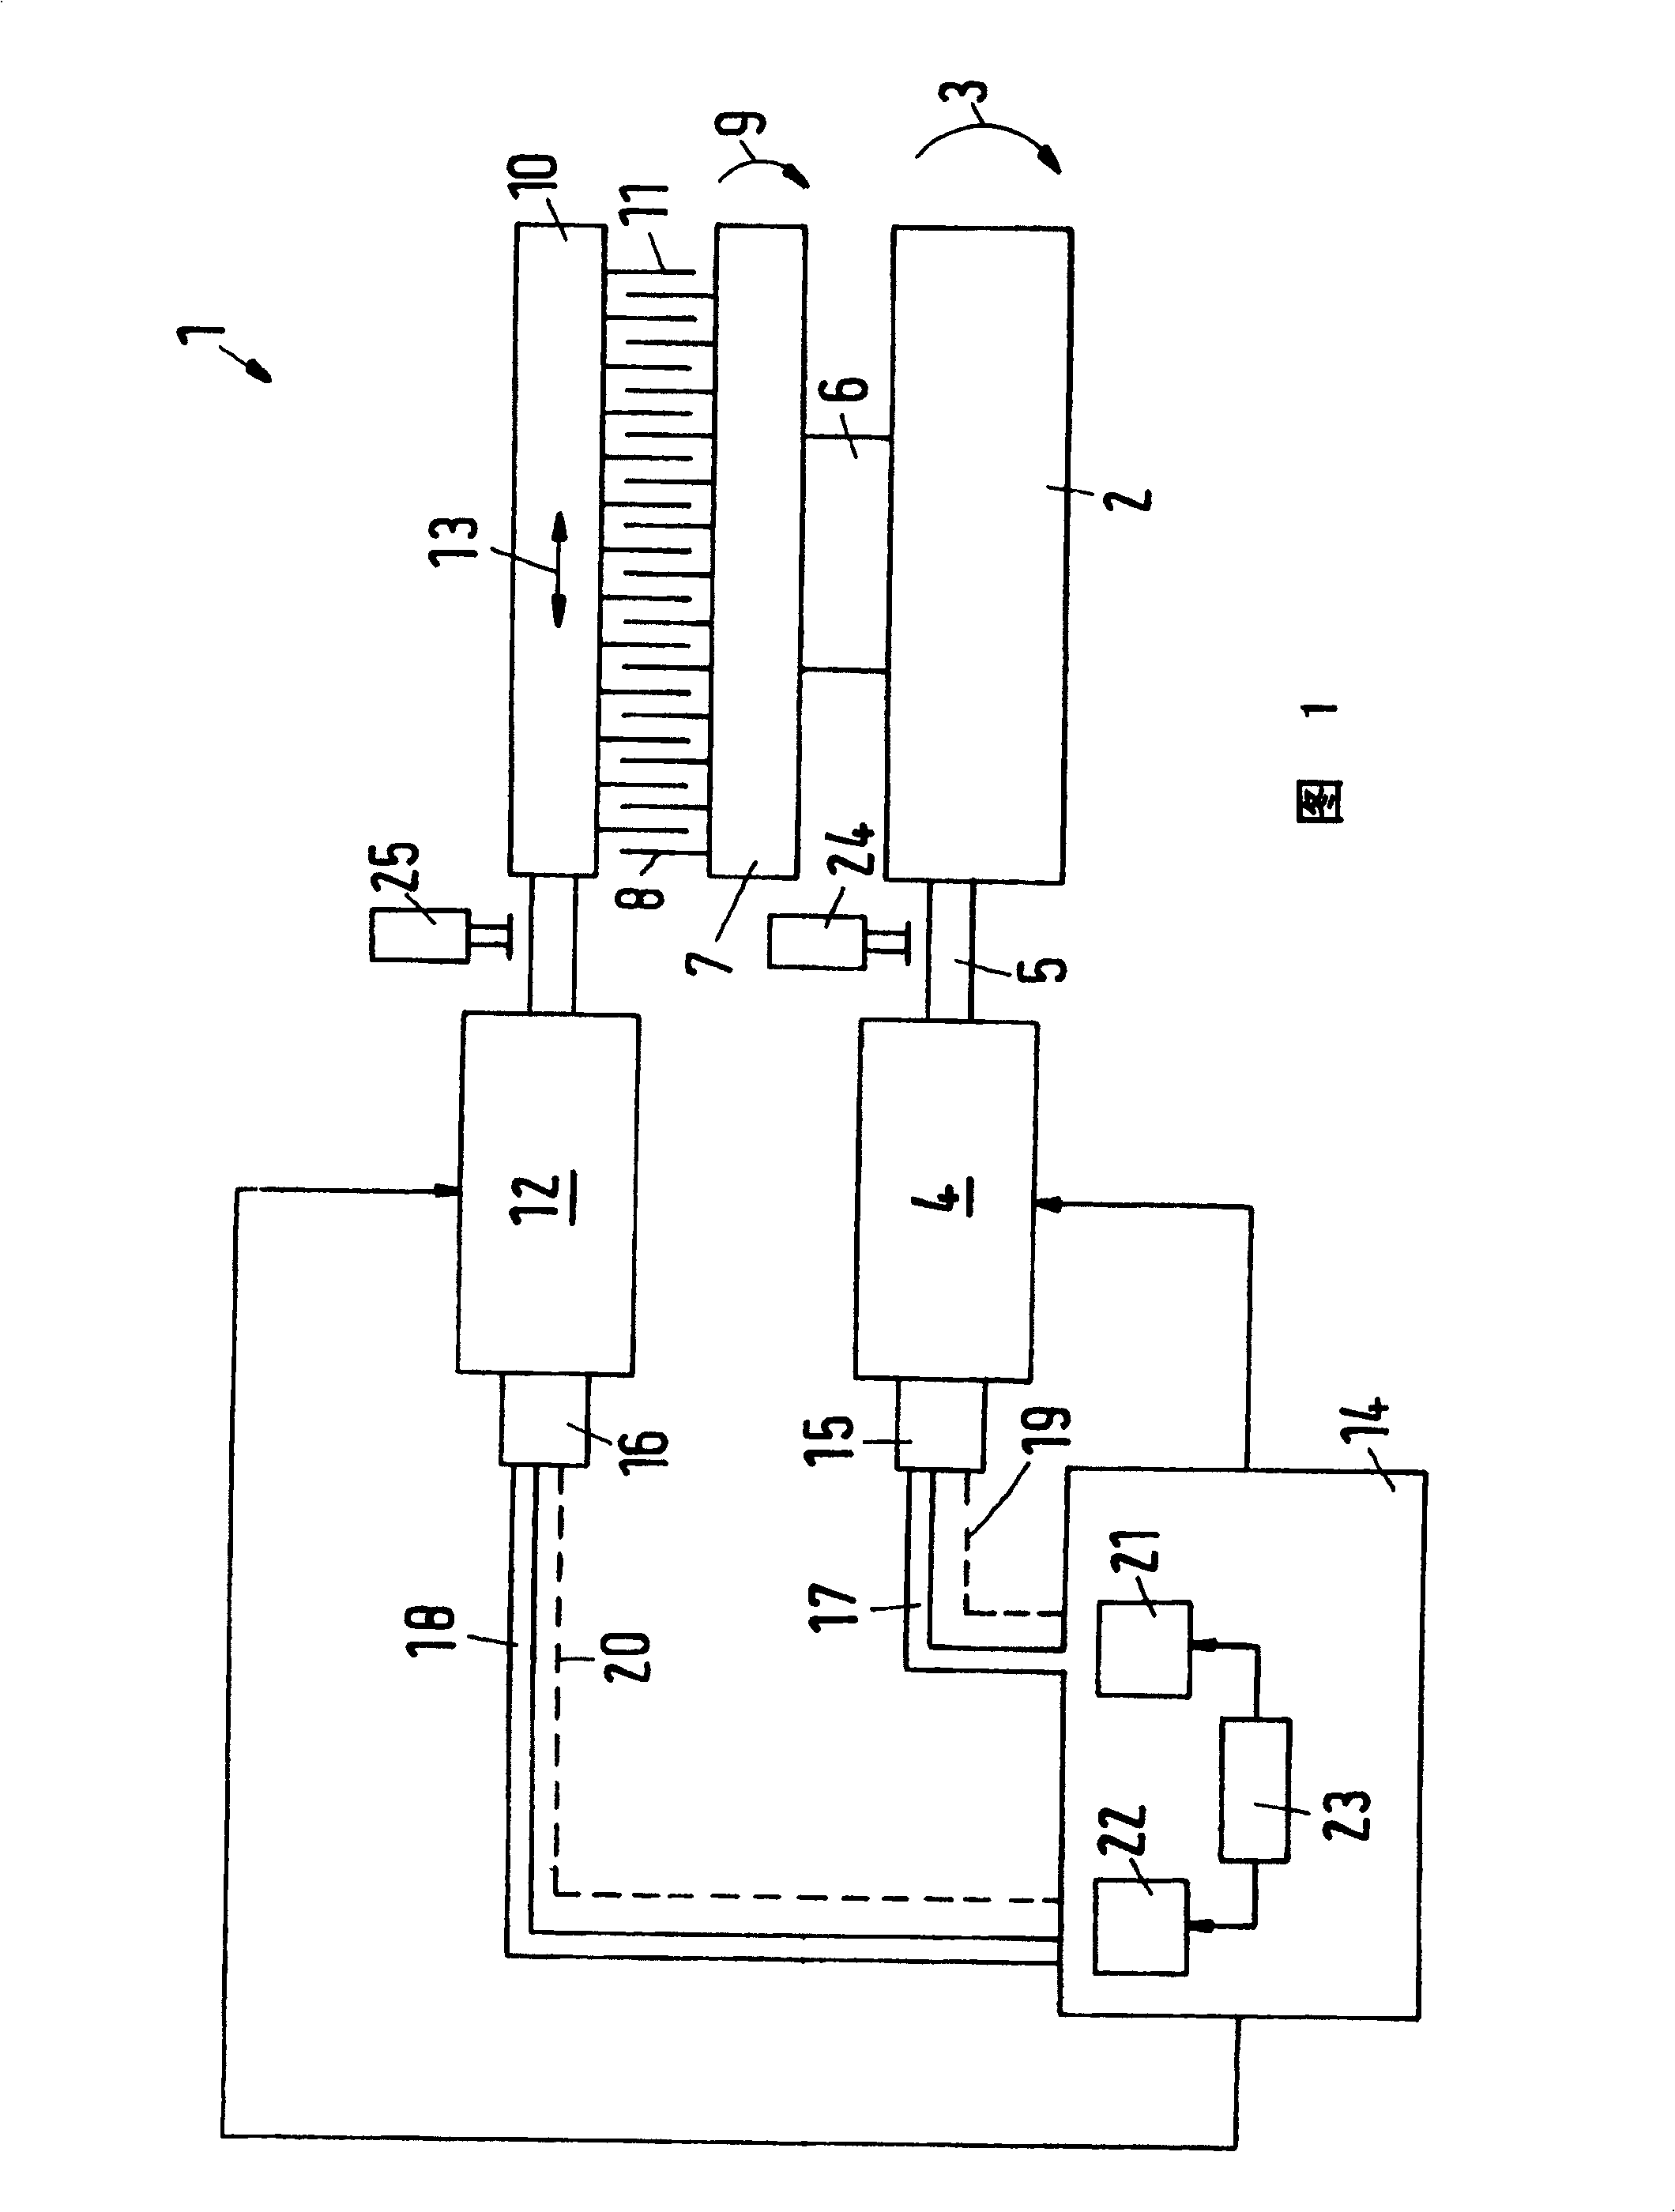 Method for operation of fast running knitting machine